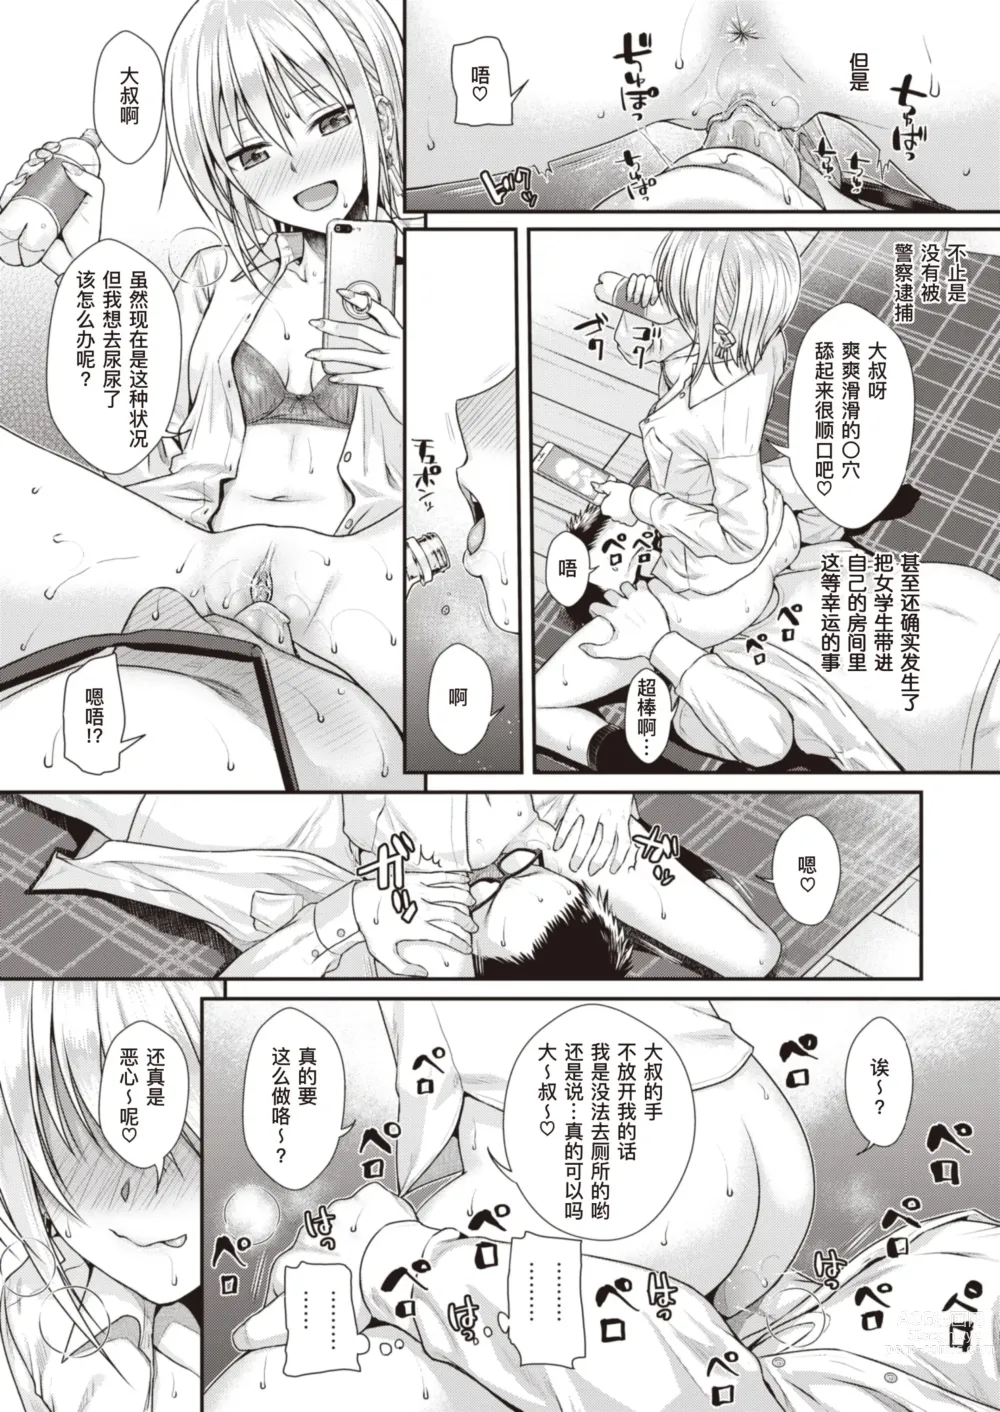 Page 19 of manga Short Cat Girl